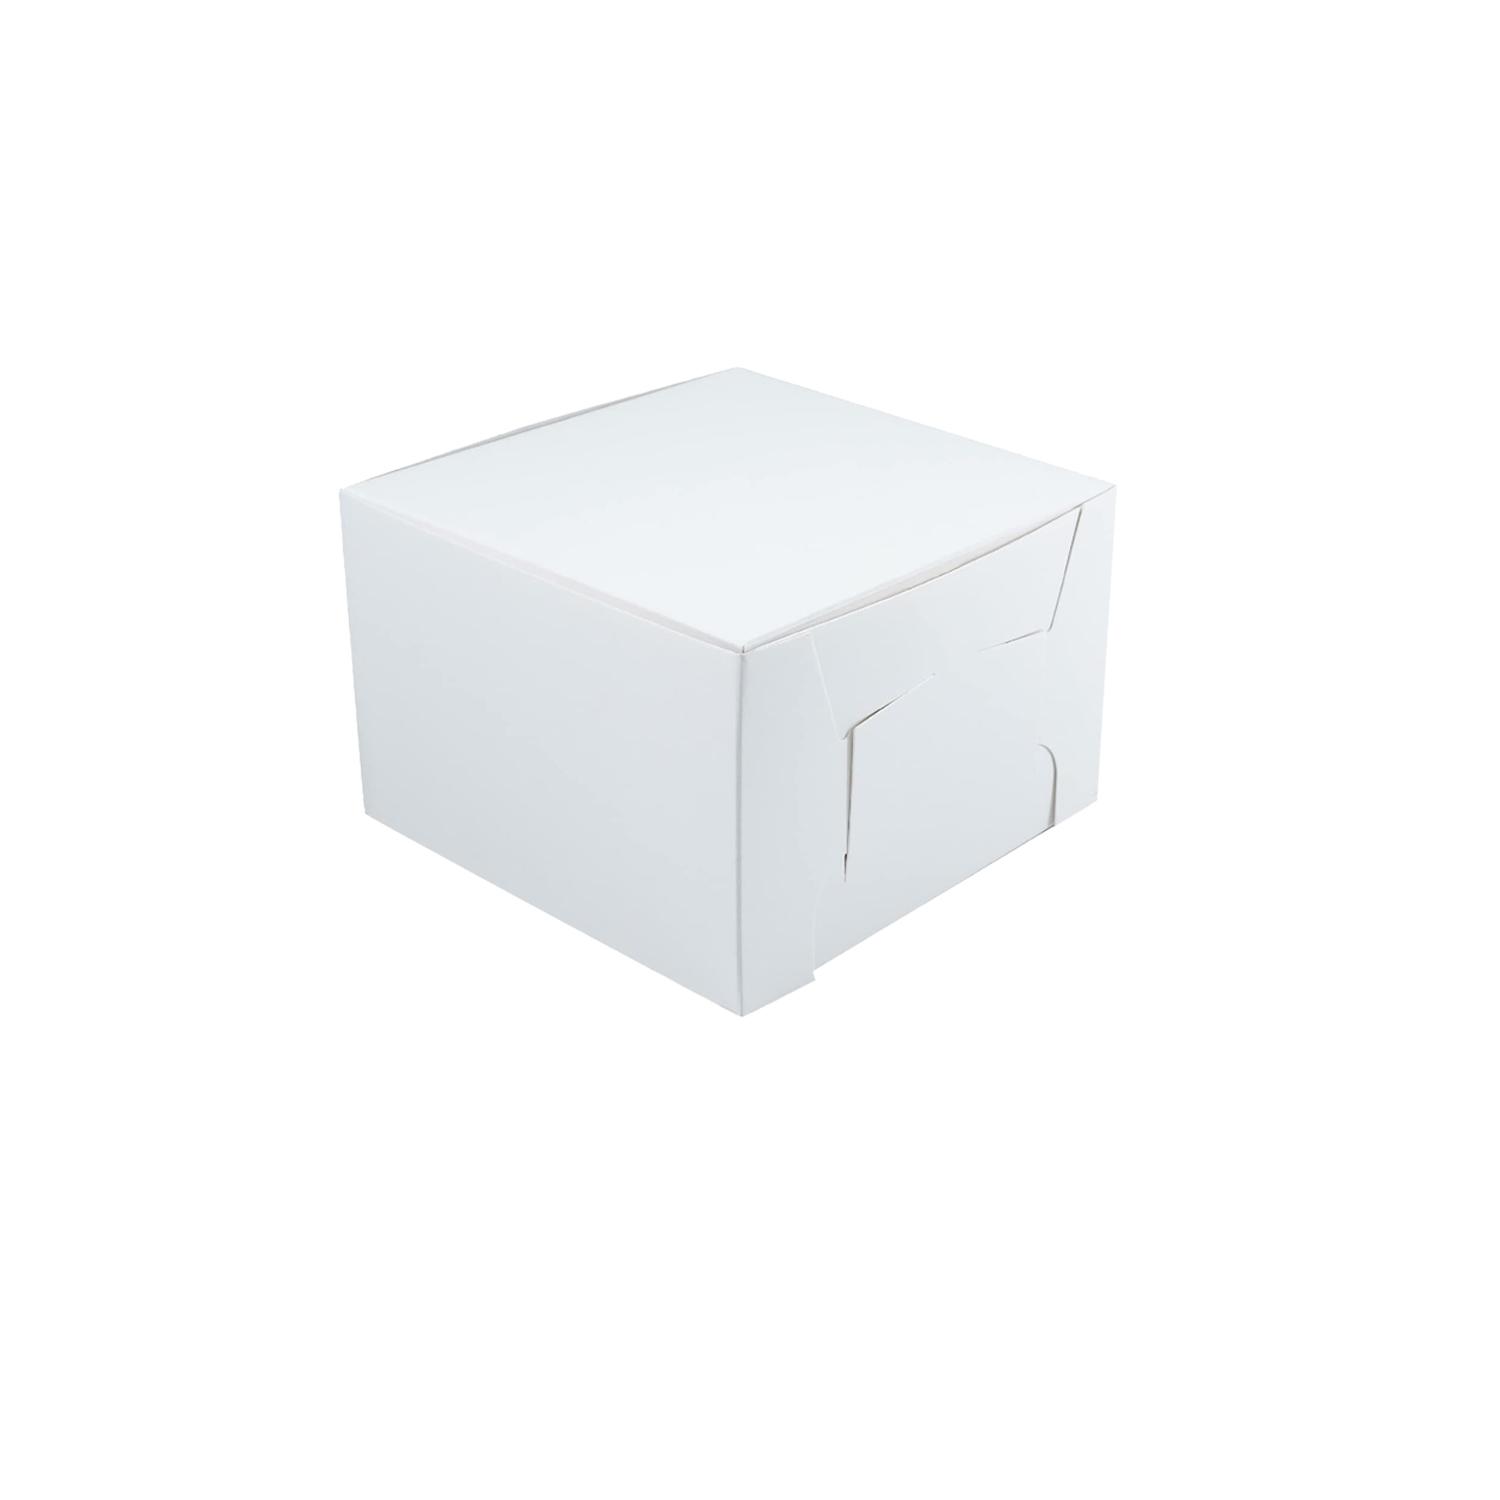 WHITE 5 X 5 X 4-INCH CAKE BOX